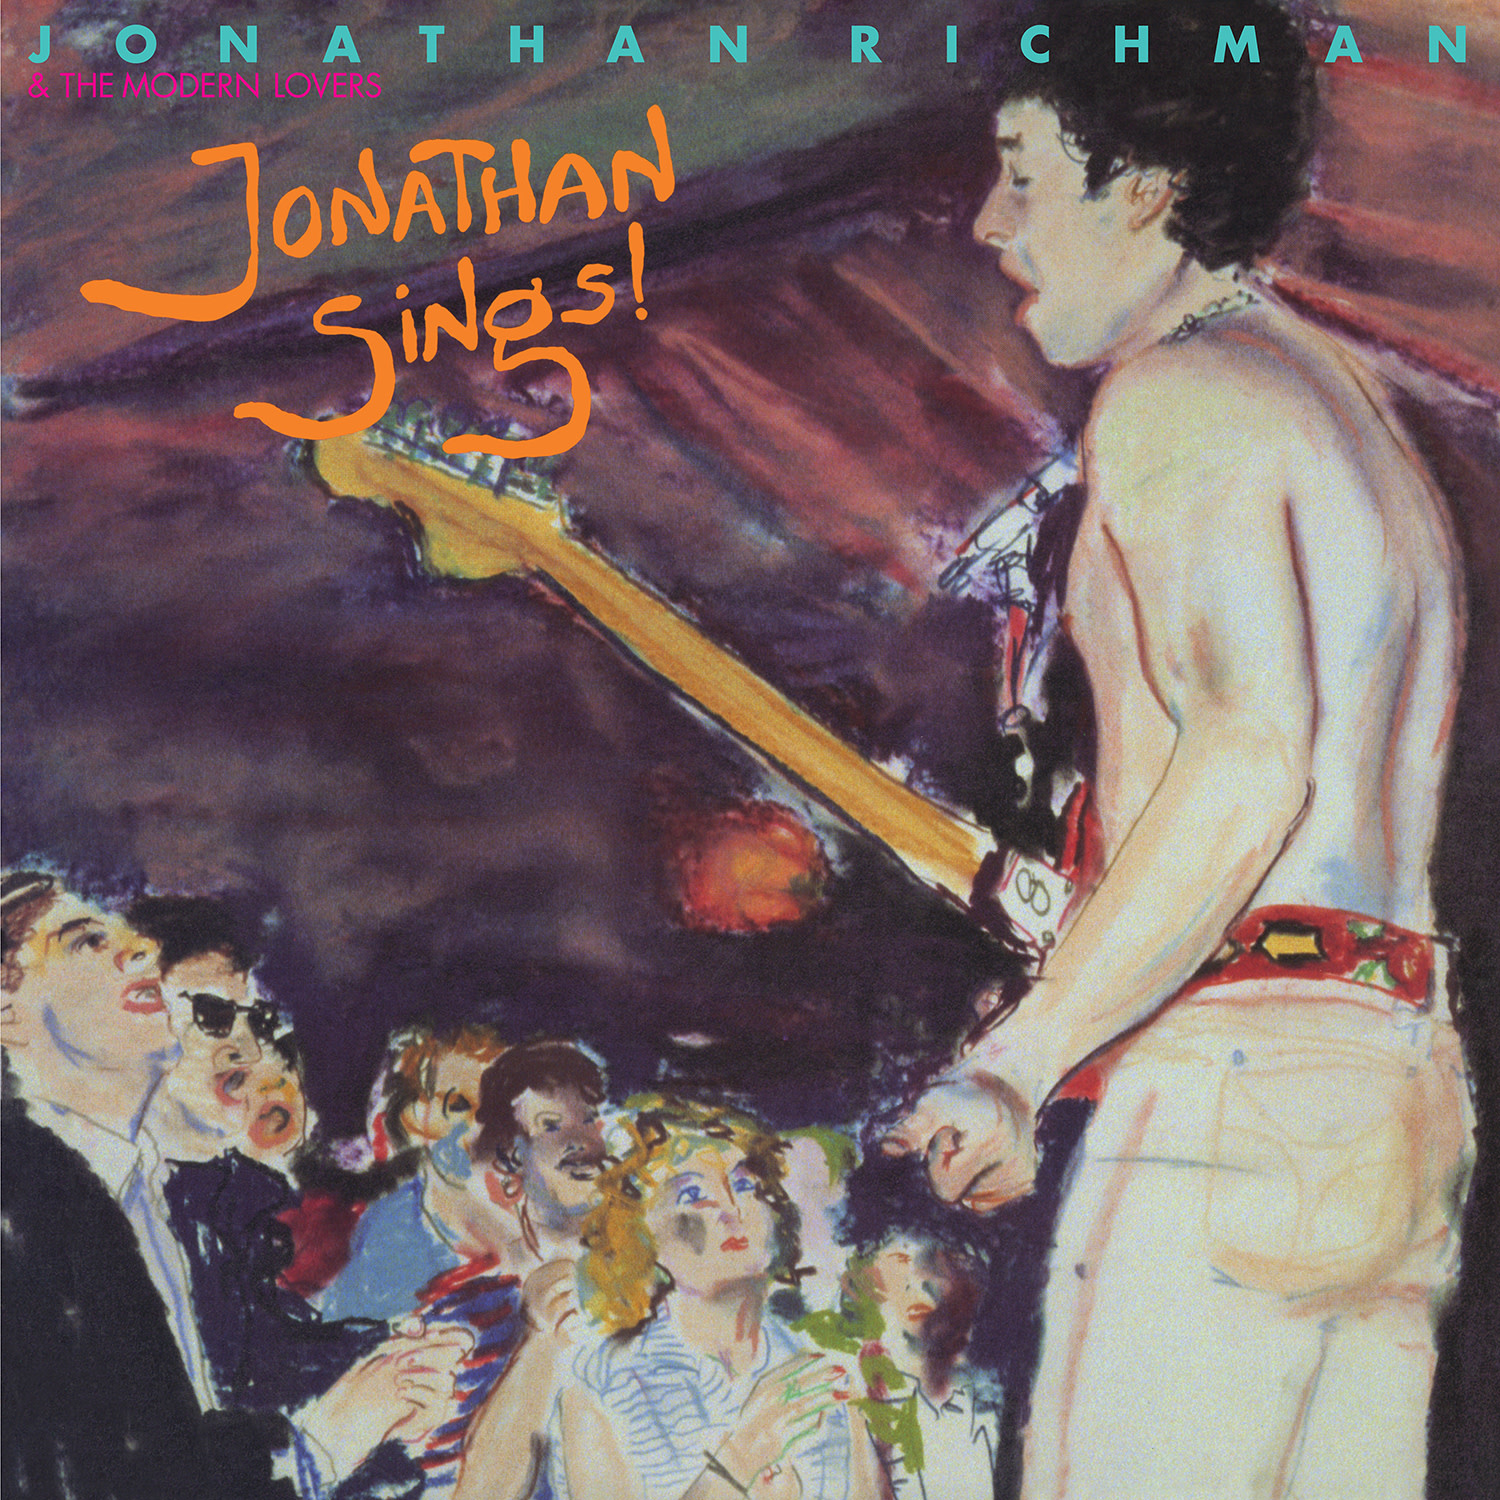 Omnivore Jonathan Richman and The Modern Lovers - Jonathan Sings! (Peach Vinyl)